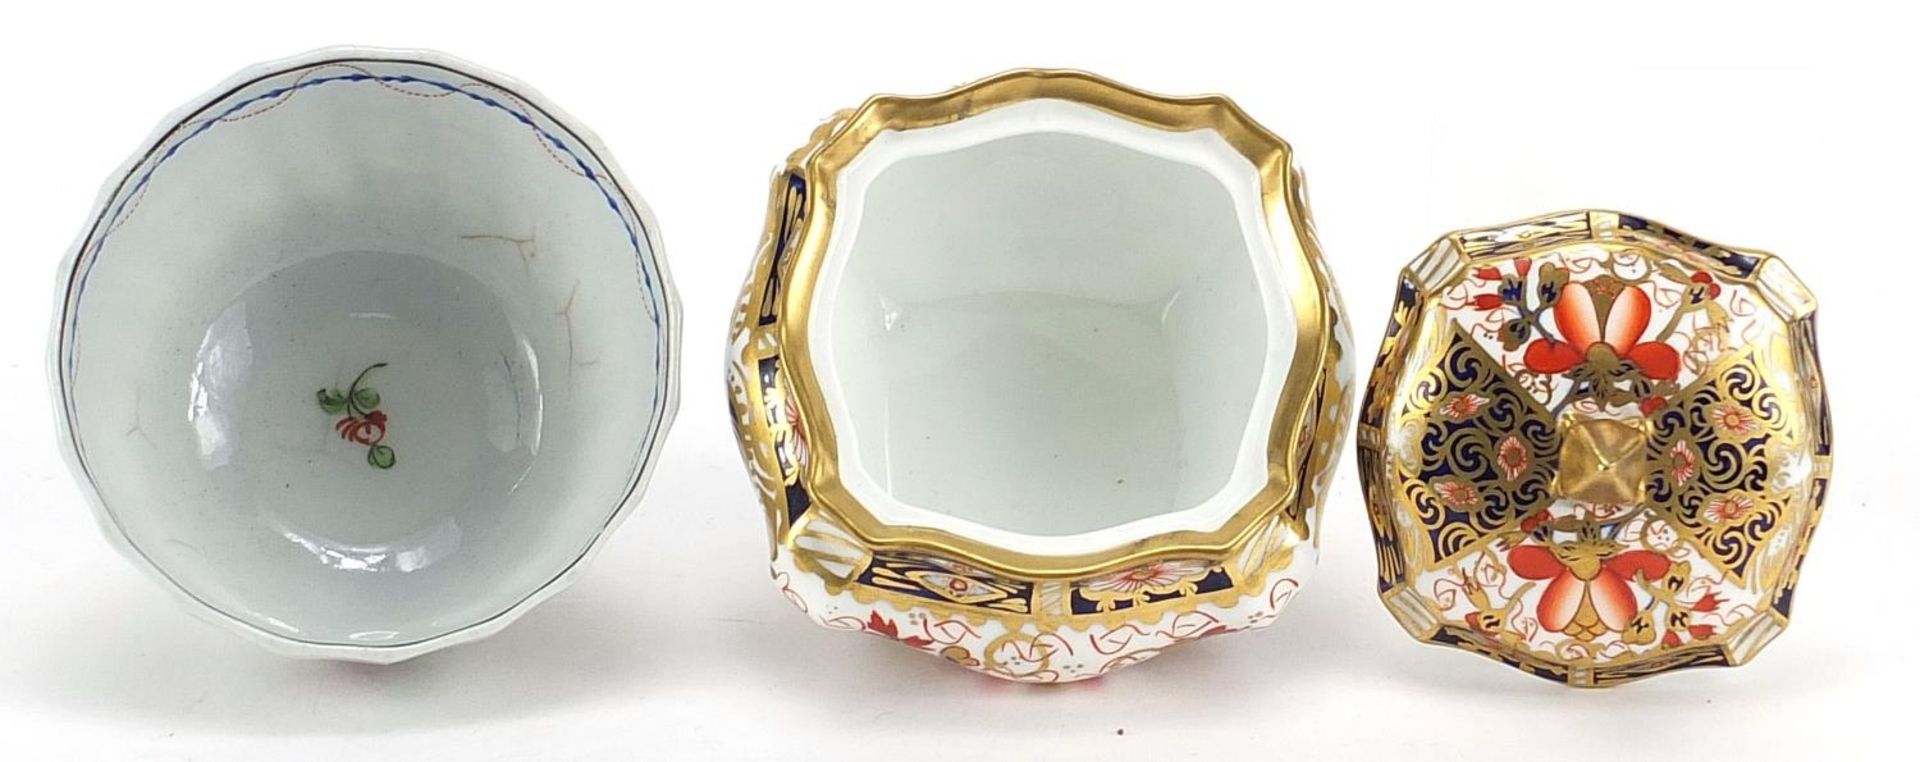 18th century porcelain tea bowl with saucer and a Royal Crown Derby Old Imari pattern trinket box - Bild 3 aus 5